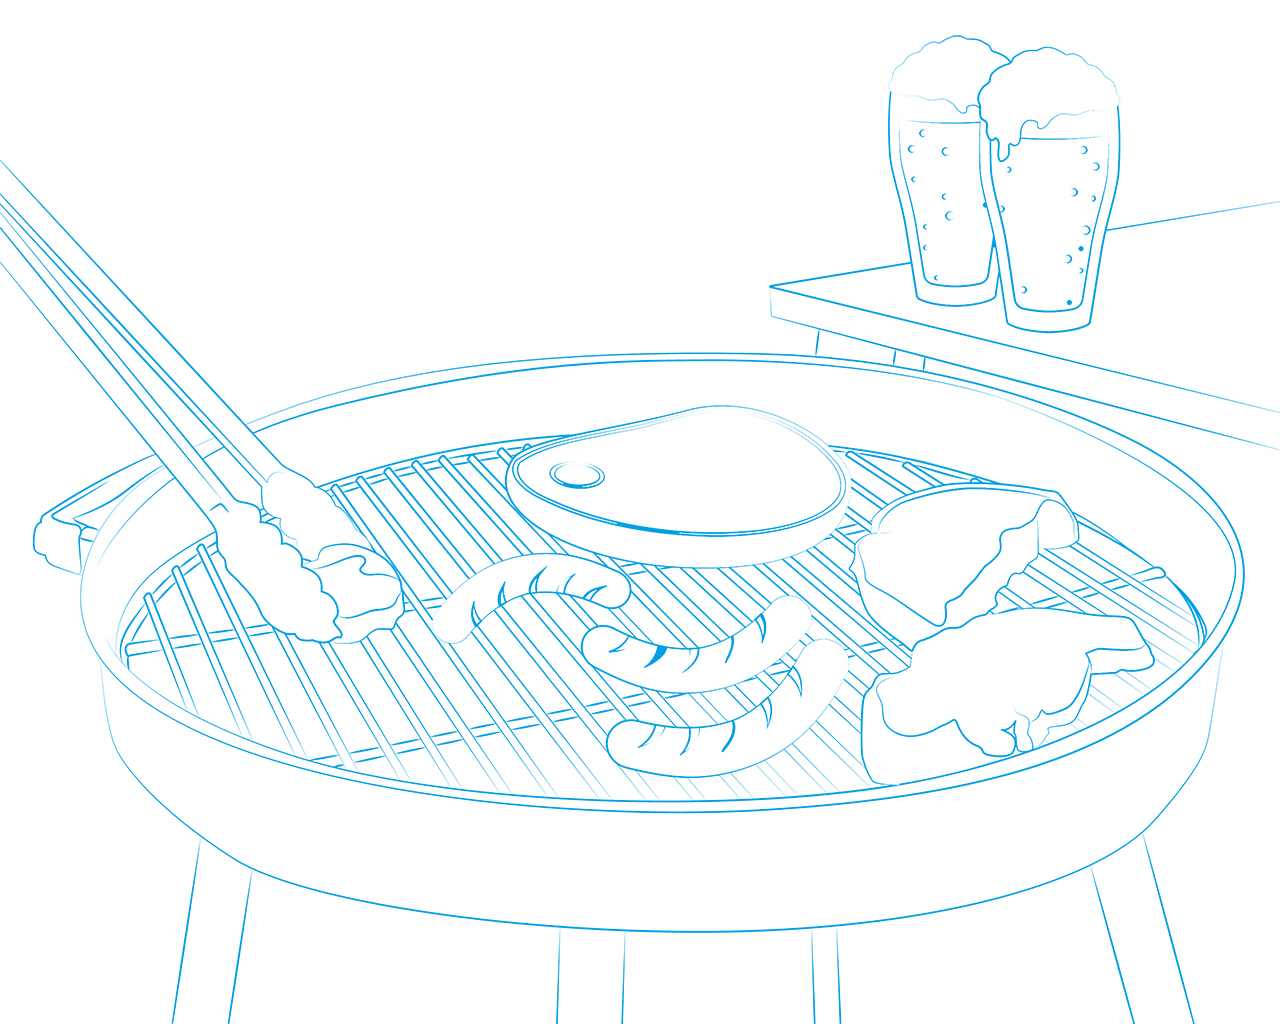 Grill, barbecue, grillowanie mięsa, grillowane mięso, mięso z grilla, grillowanie kiełbasy, grillowana kiełbasa, kiełbasa z grilla, piwo przy grillu